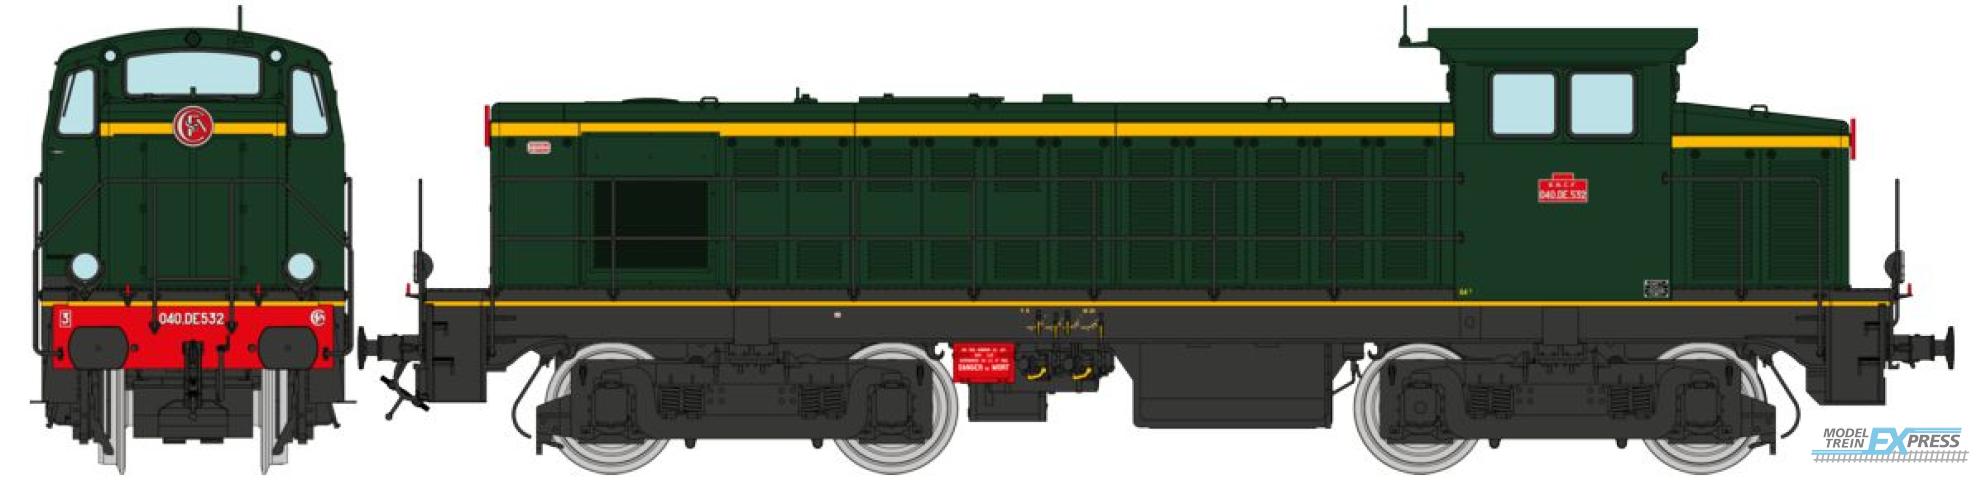 REE models JM-007SAC Diesel Locomotive 040 DE 532 Origin, West, Era  III - AC SOUND 3 Rails AC